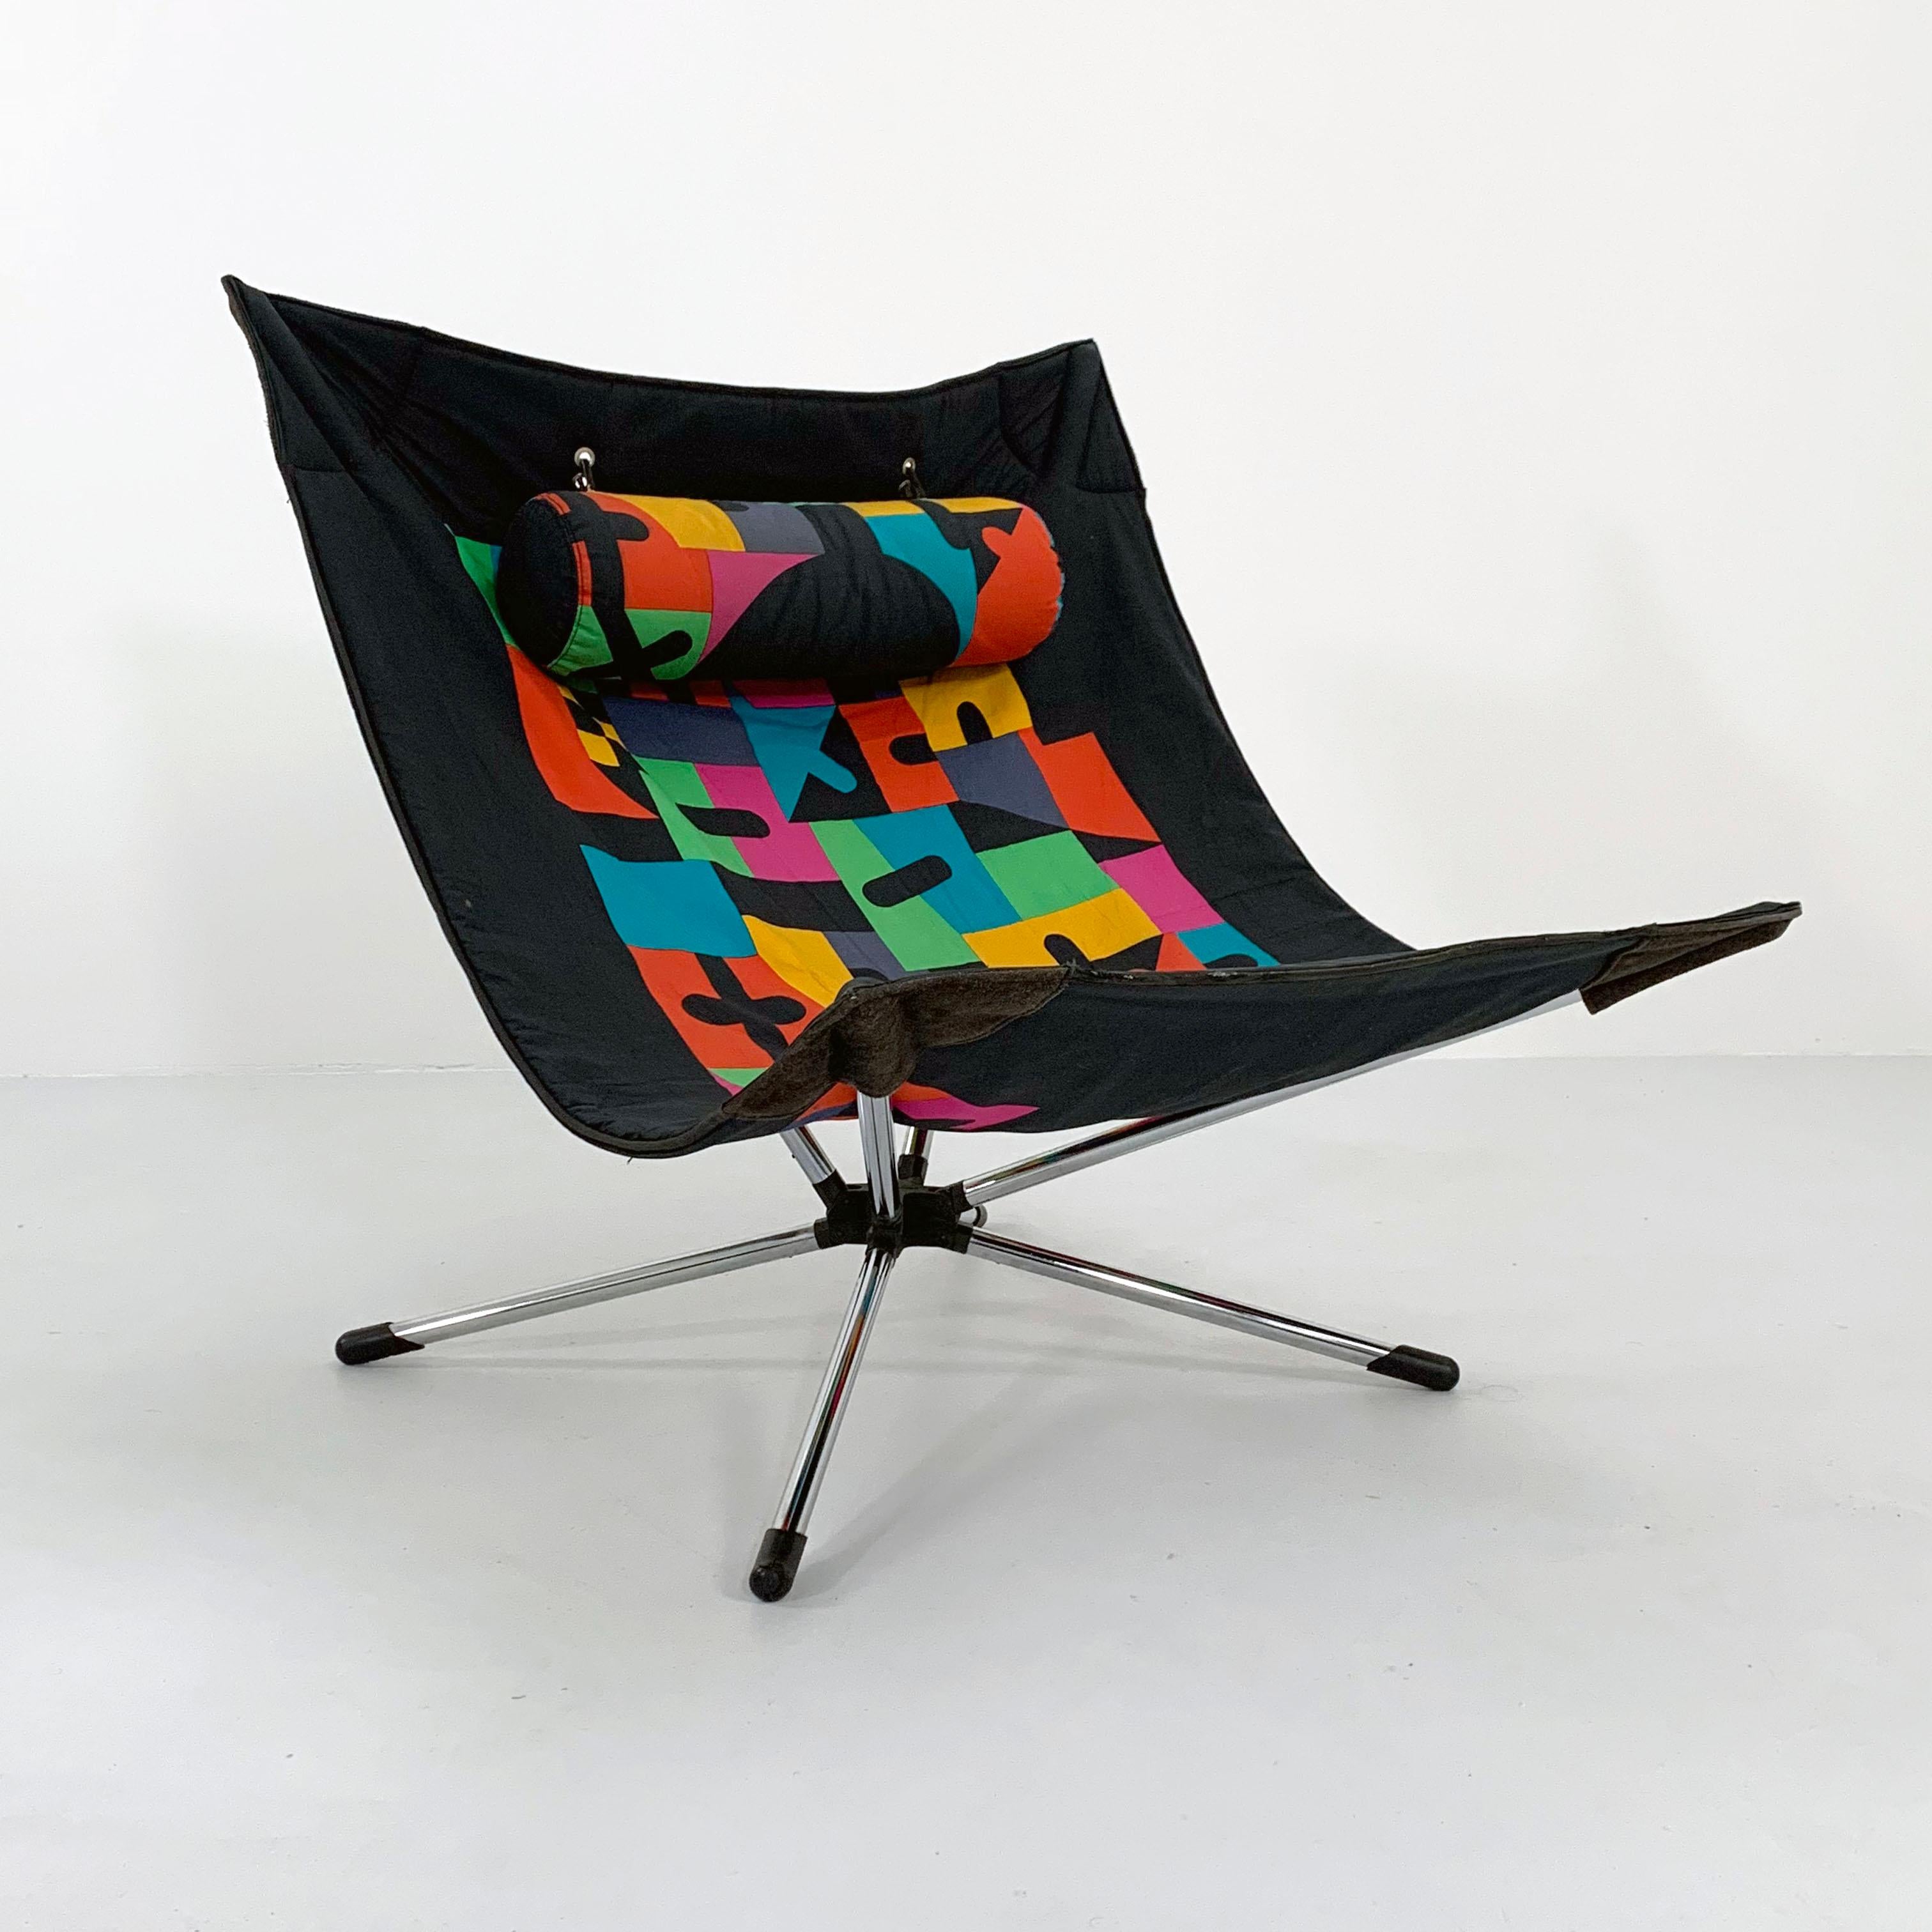 Miamina chair by Alberto Salviati & Ambrogio Tresoldi for Saporiti, 1980s
Designer - Alberto Salviati & Ambrogio Tresoldi
Producer - Saporiti 
Model - Miamina Chair 
Design Period - Eighties
Measurements - Width 91 cm x Depth 100 cm x Height 94